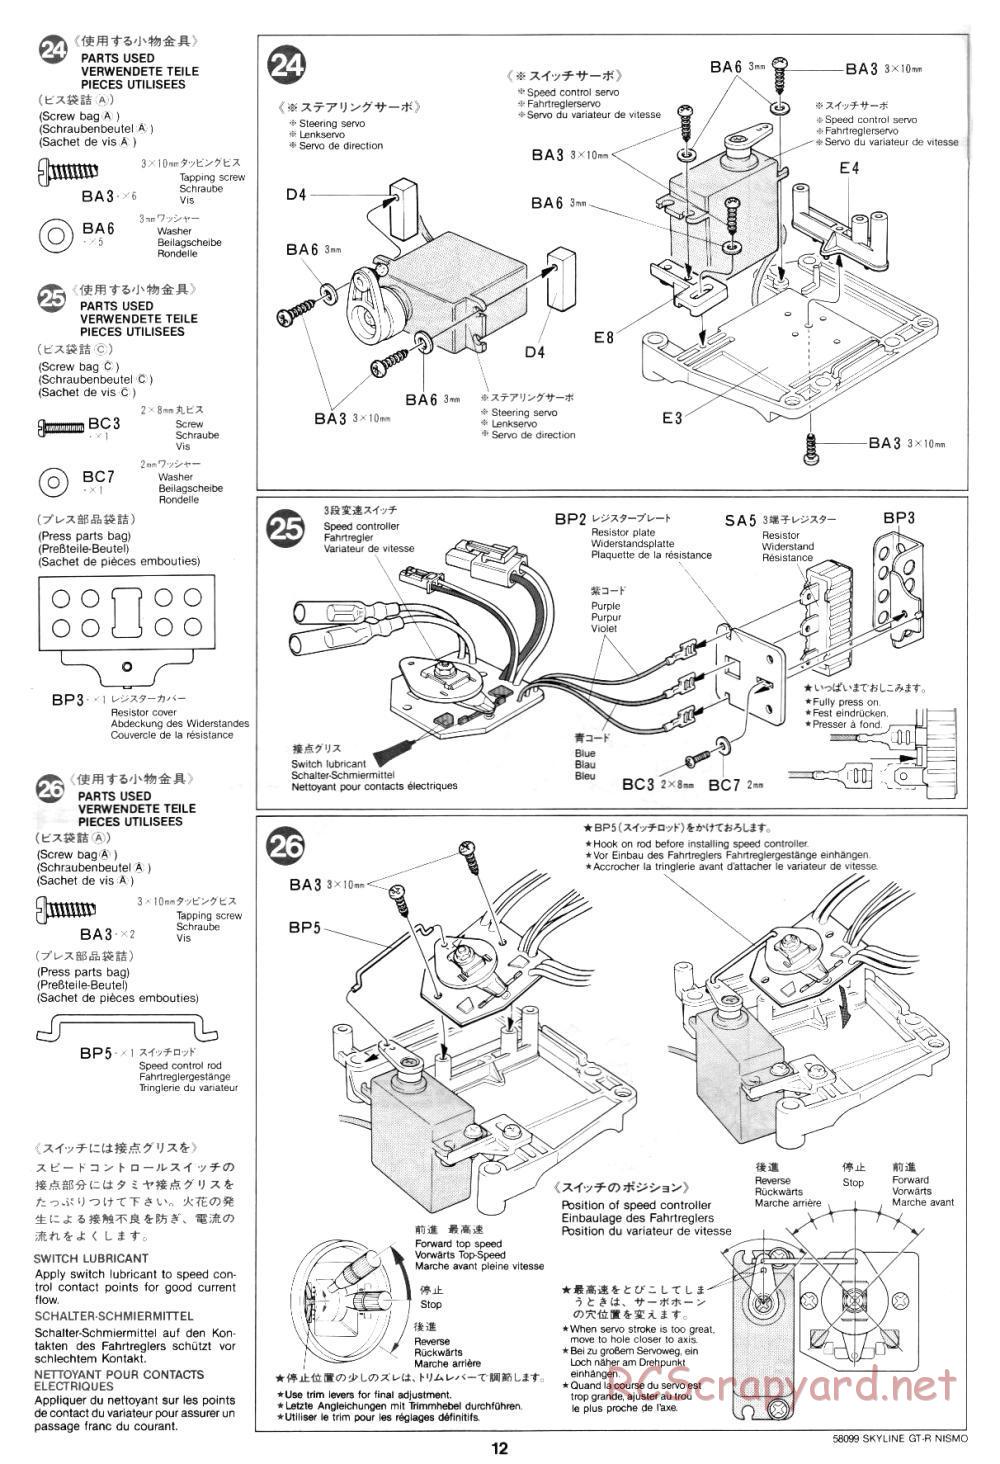 Tamiya - Nissan Skyline GT-R Nismo - 58099 - Manual - Page 12